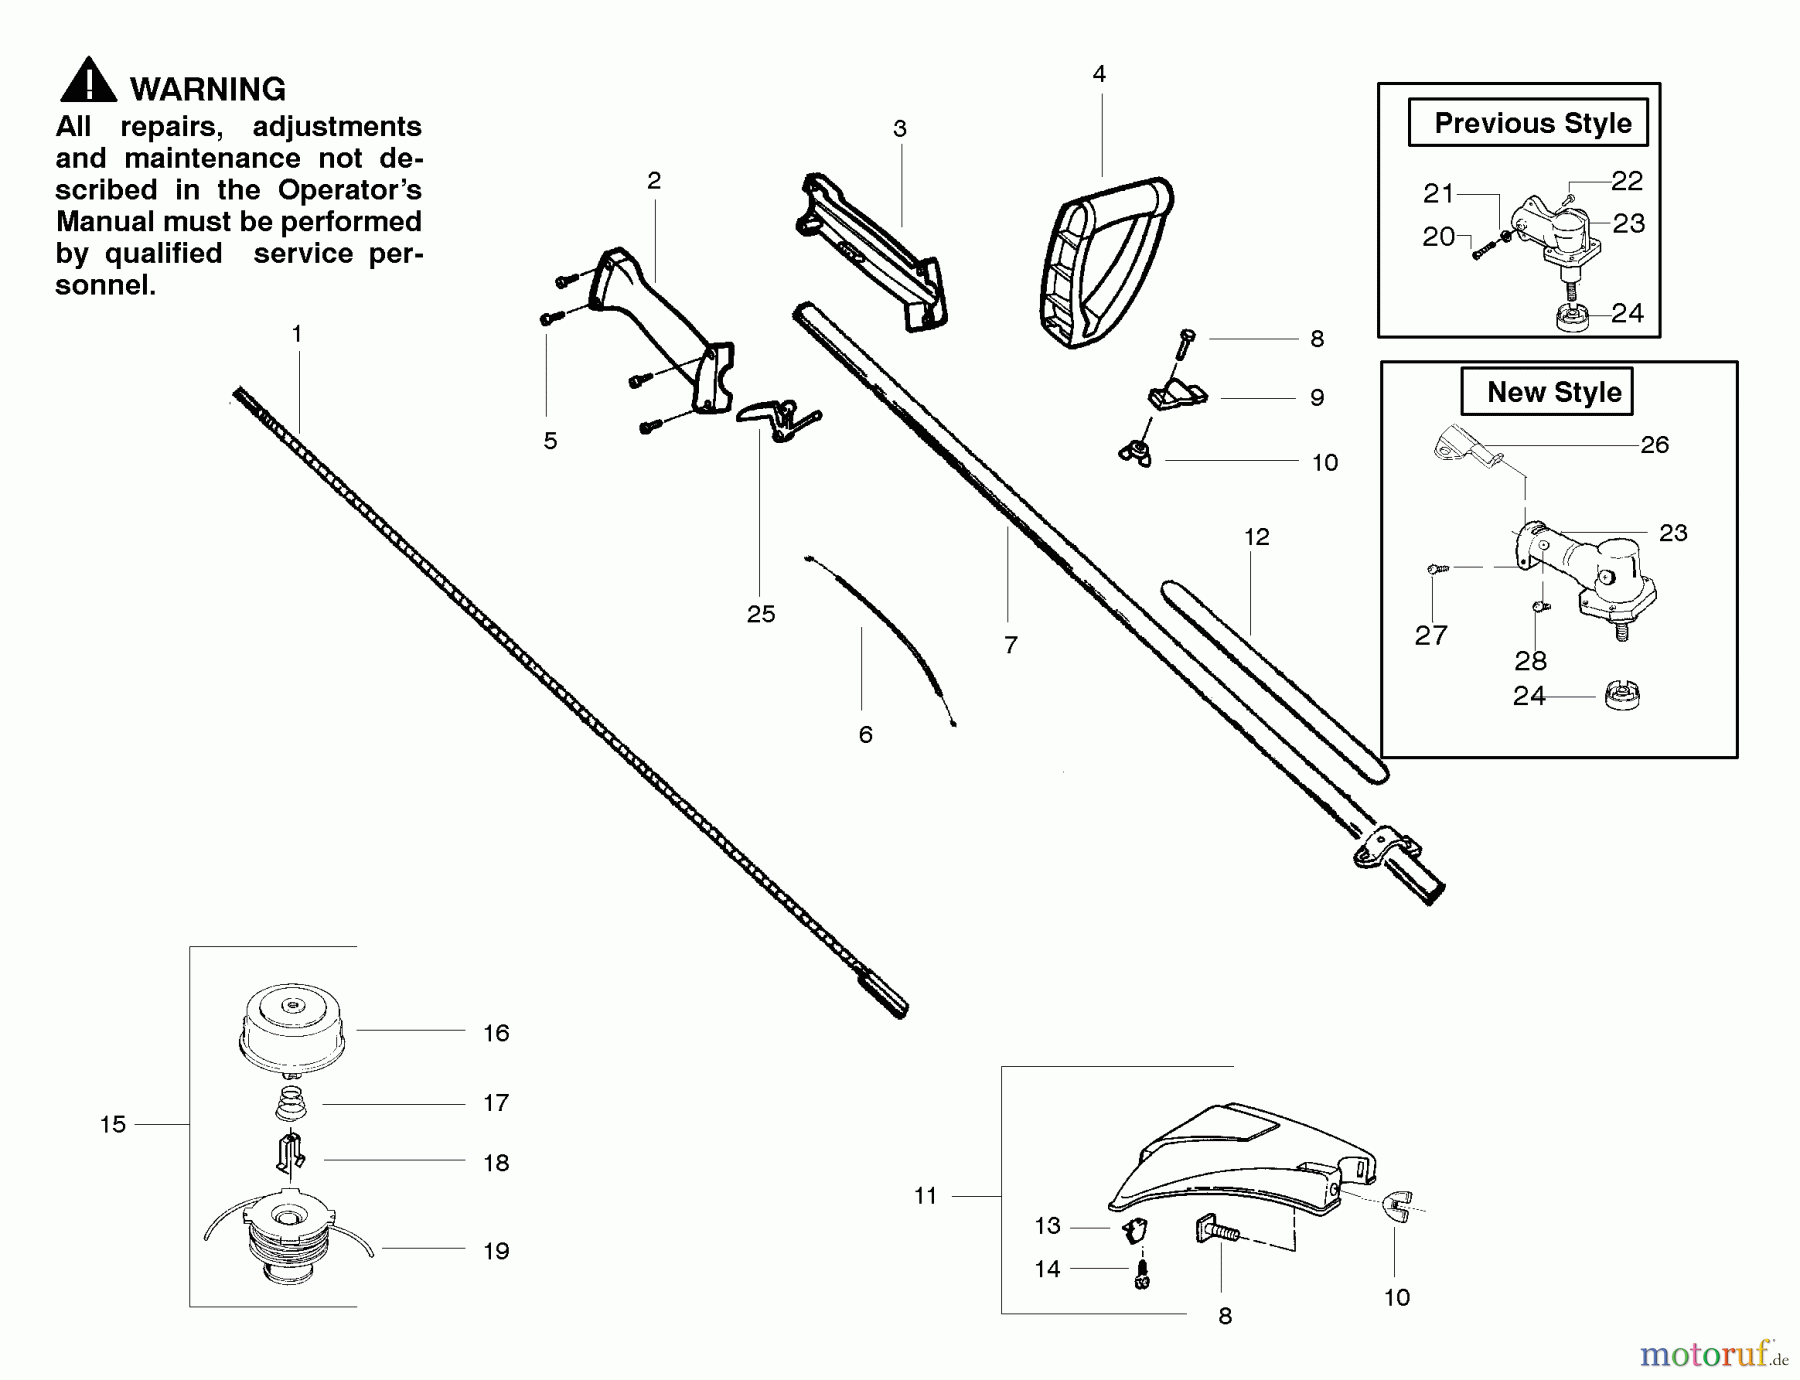  Poulan / Weed Eater Motorsensen, Trimmer XT600 (Type 2) - Weed Eater String Trimmer Handle & Shaft Assembly